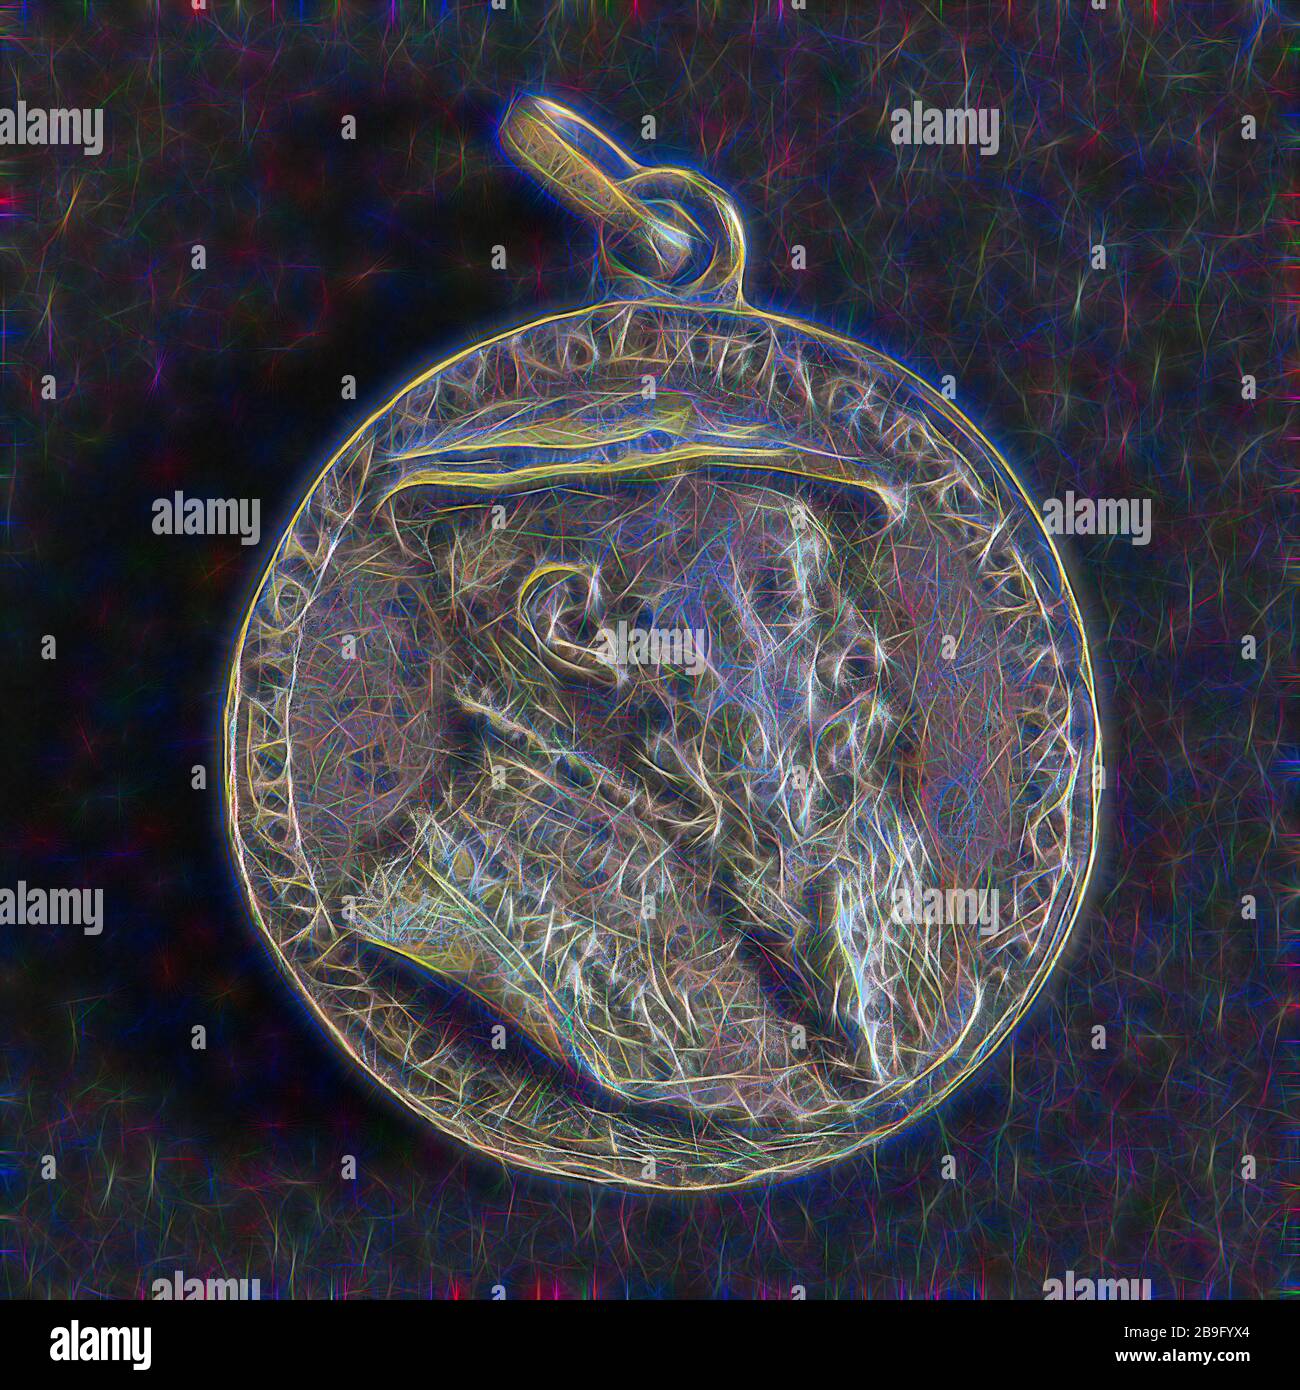 Medal on Wilhelm Lofflholcz, penning footage copper silver, silvered, bust Wilhelm Lofflholcz councilor at Nuremberg, WILHELM LOFFLHOLCZ ZV KOLBERG. ETATIS. XXXX. Germany Nuremberg Stock Photo